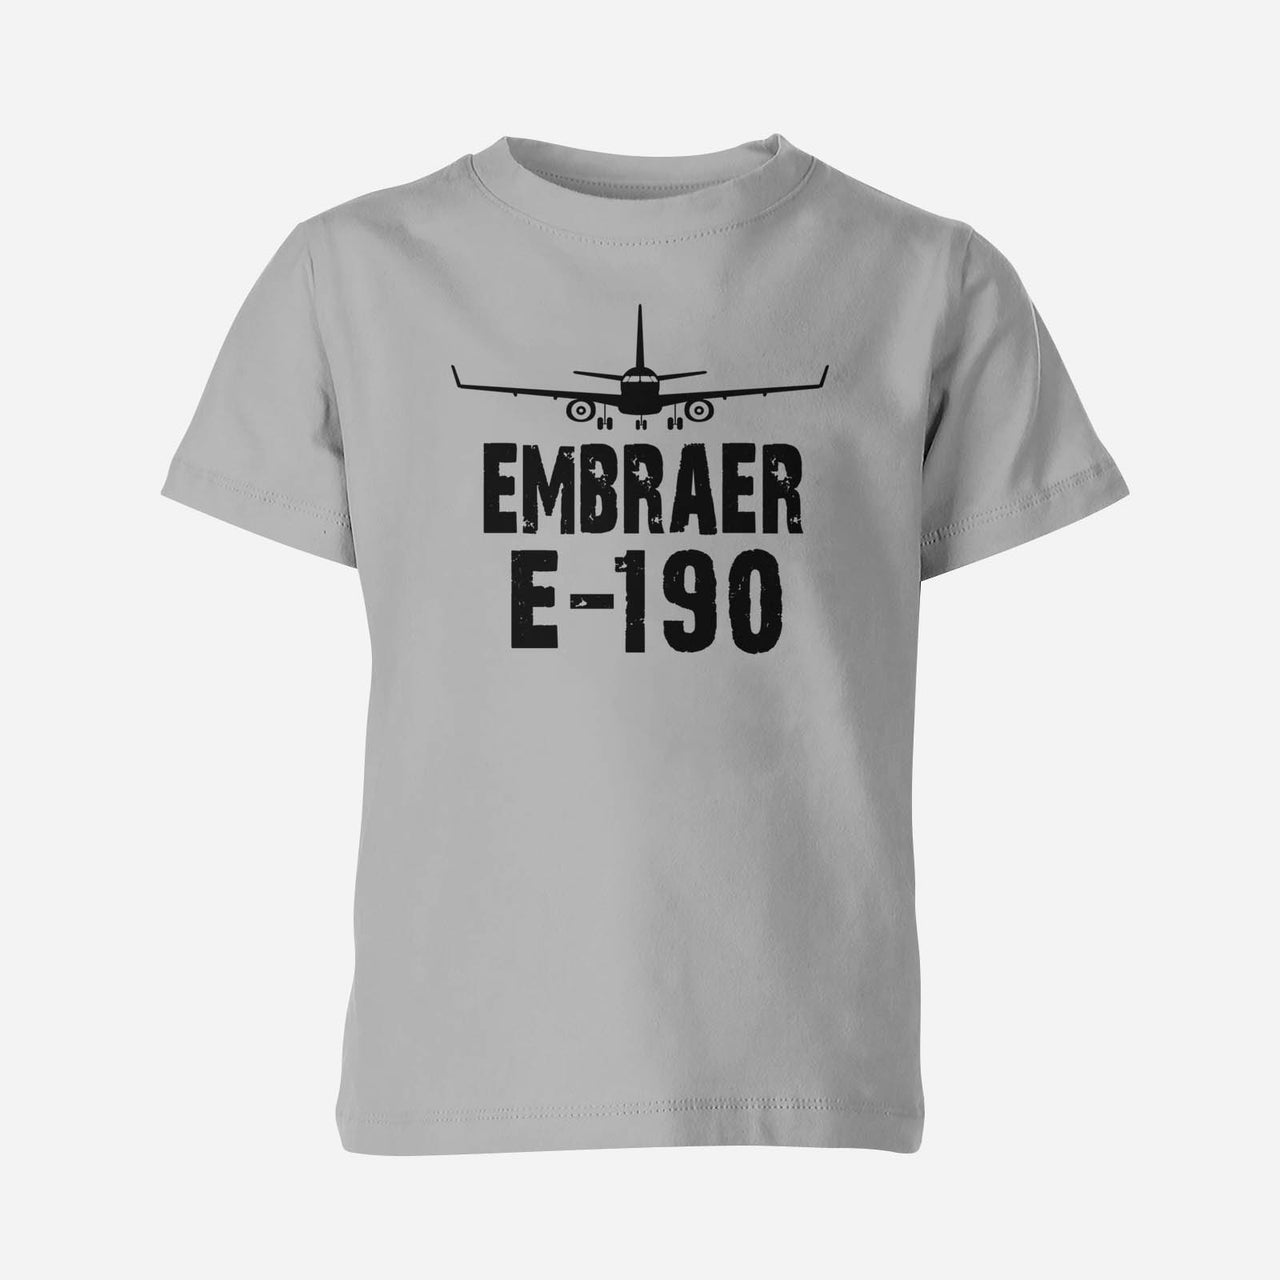 Embraer E-190 & Plane Designed Children T-Shirts